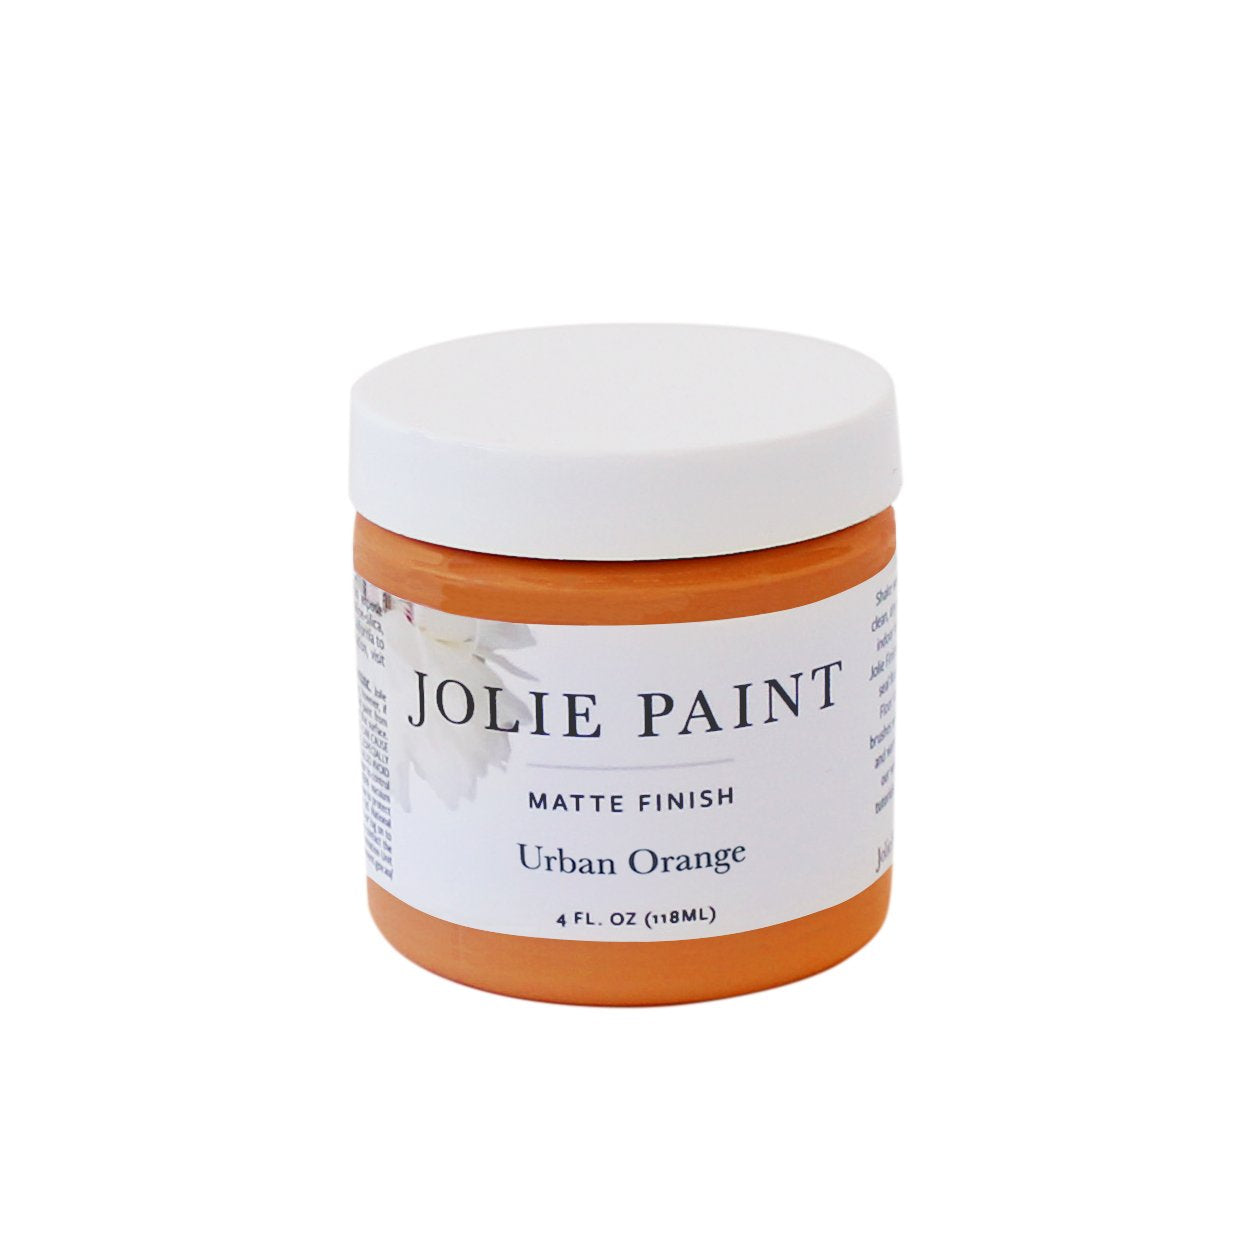 Jolie Paint - Matte Finish - Urban Orange